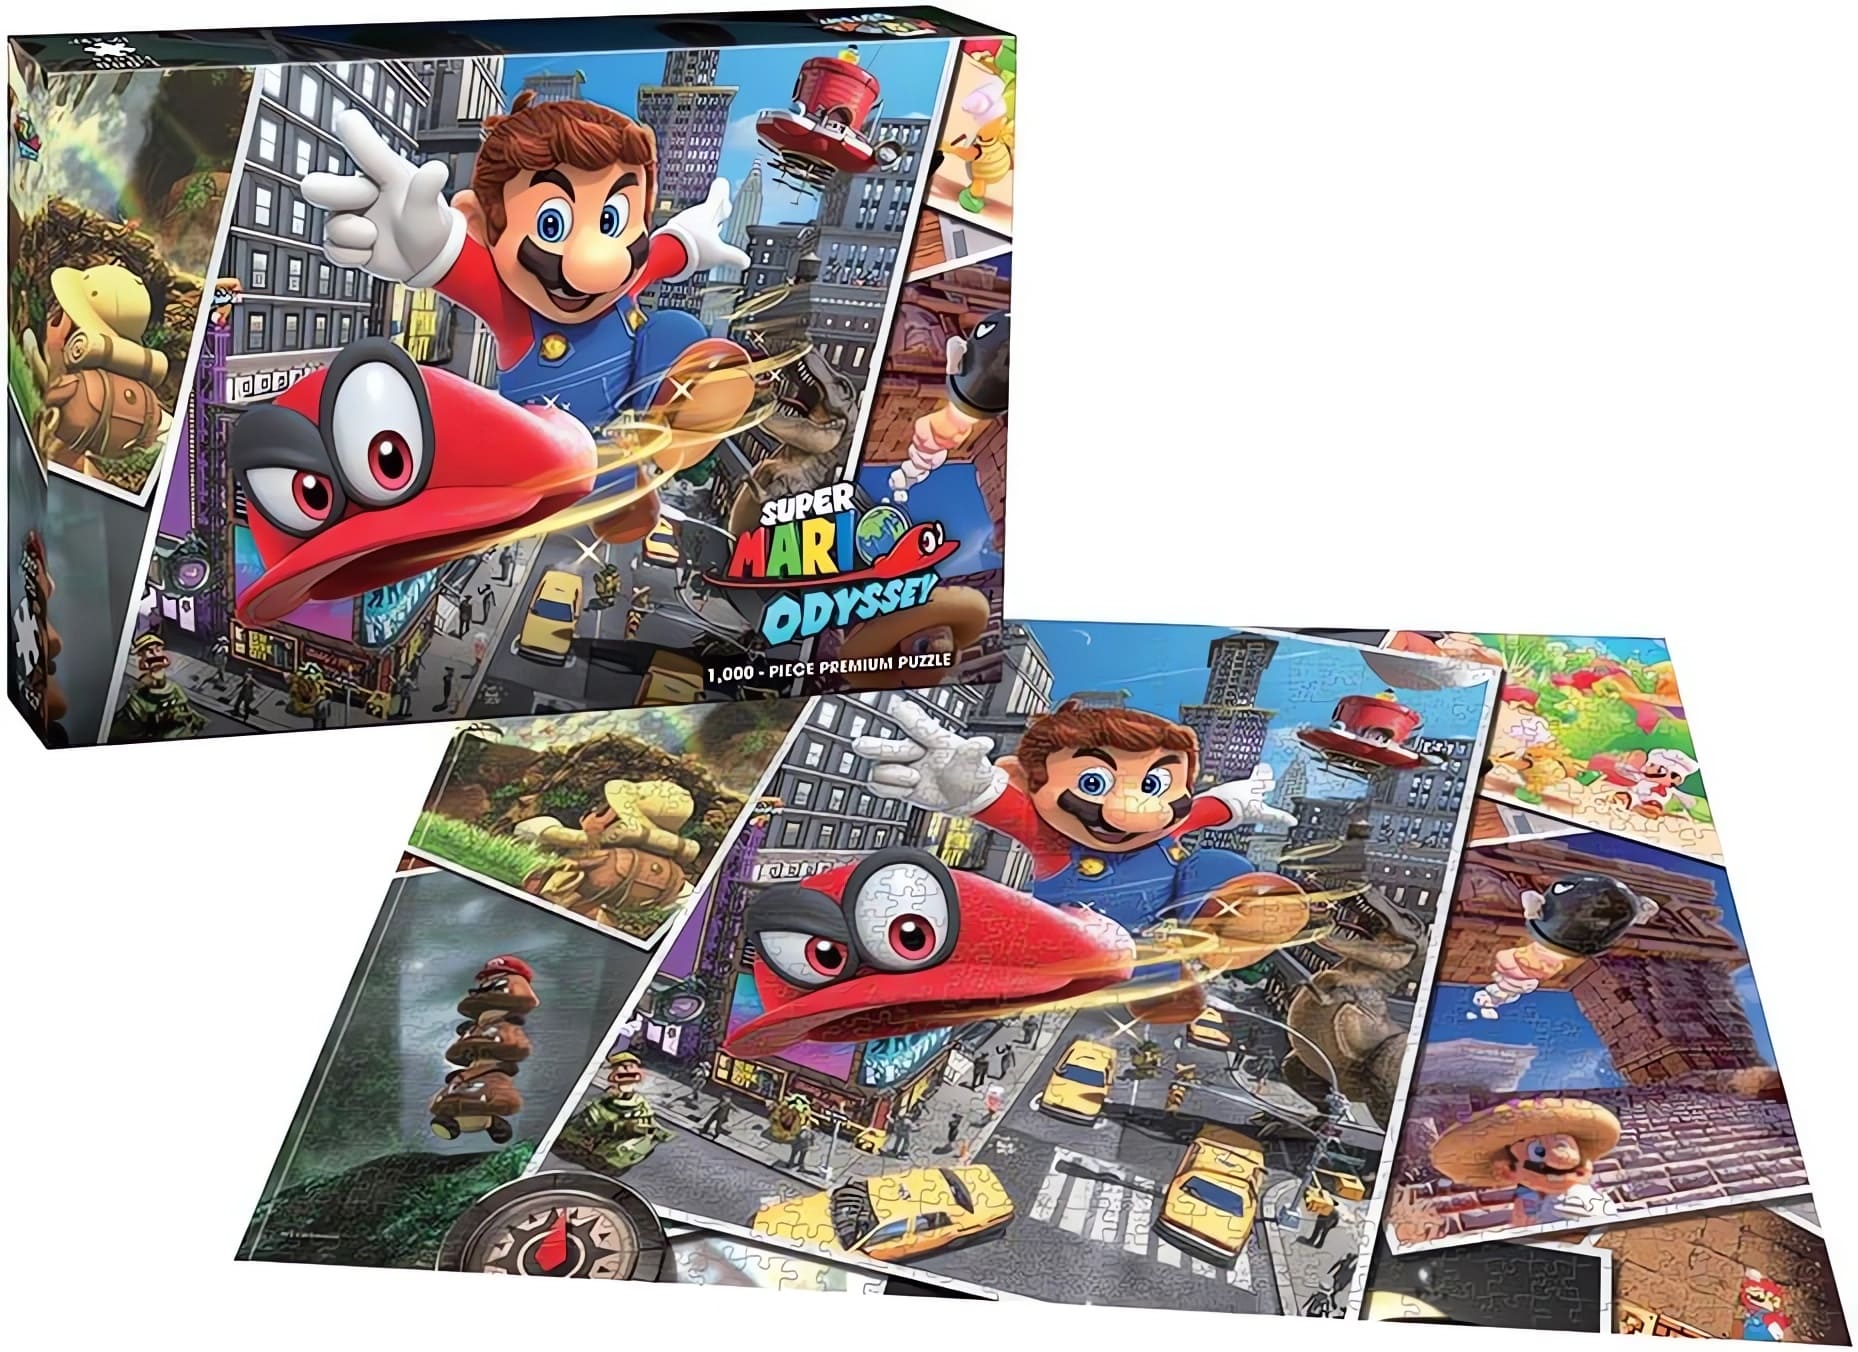 Super Mario Odyssey: Snapshots Puzzle | Box and pieces